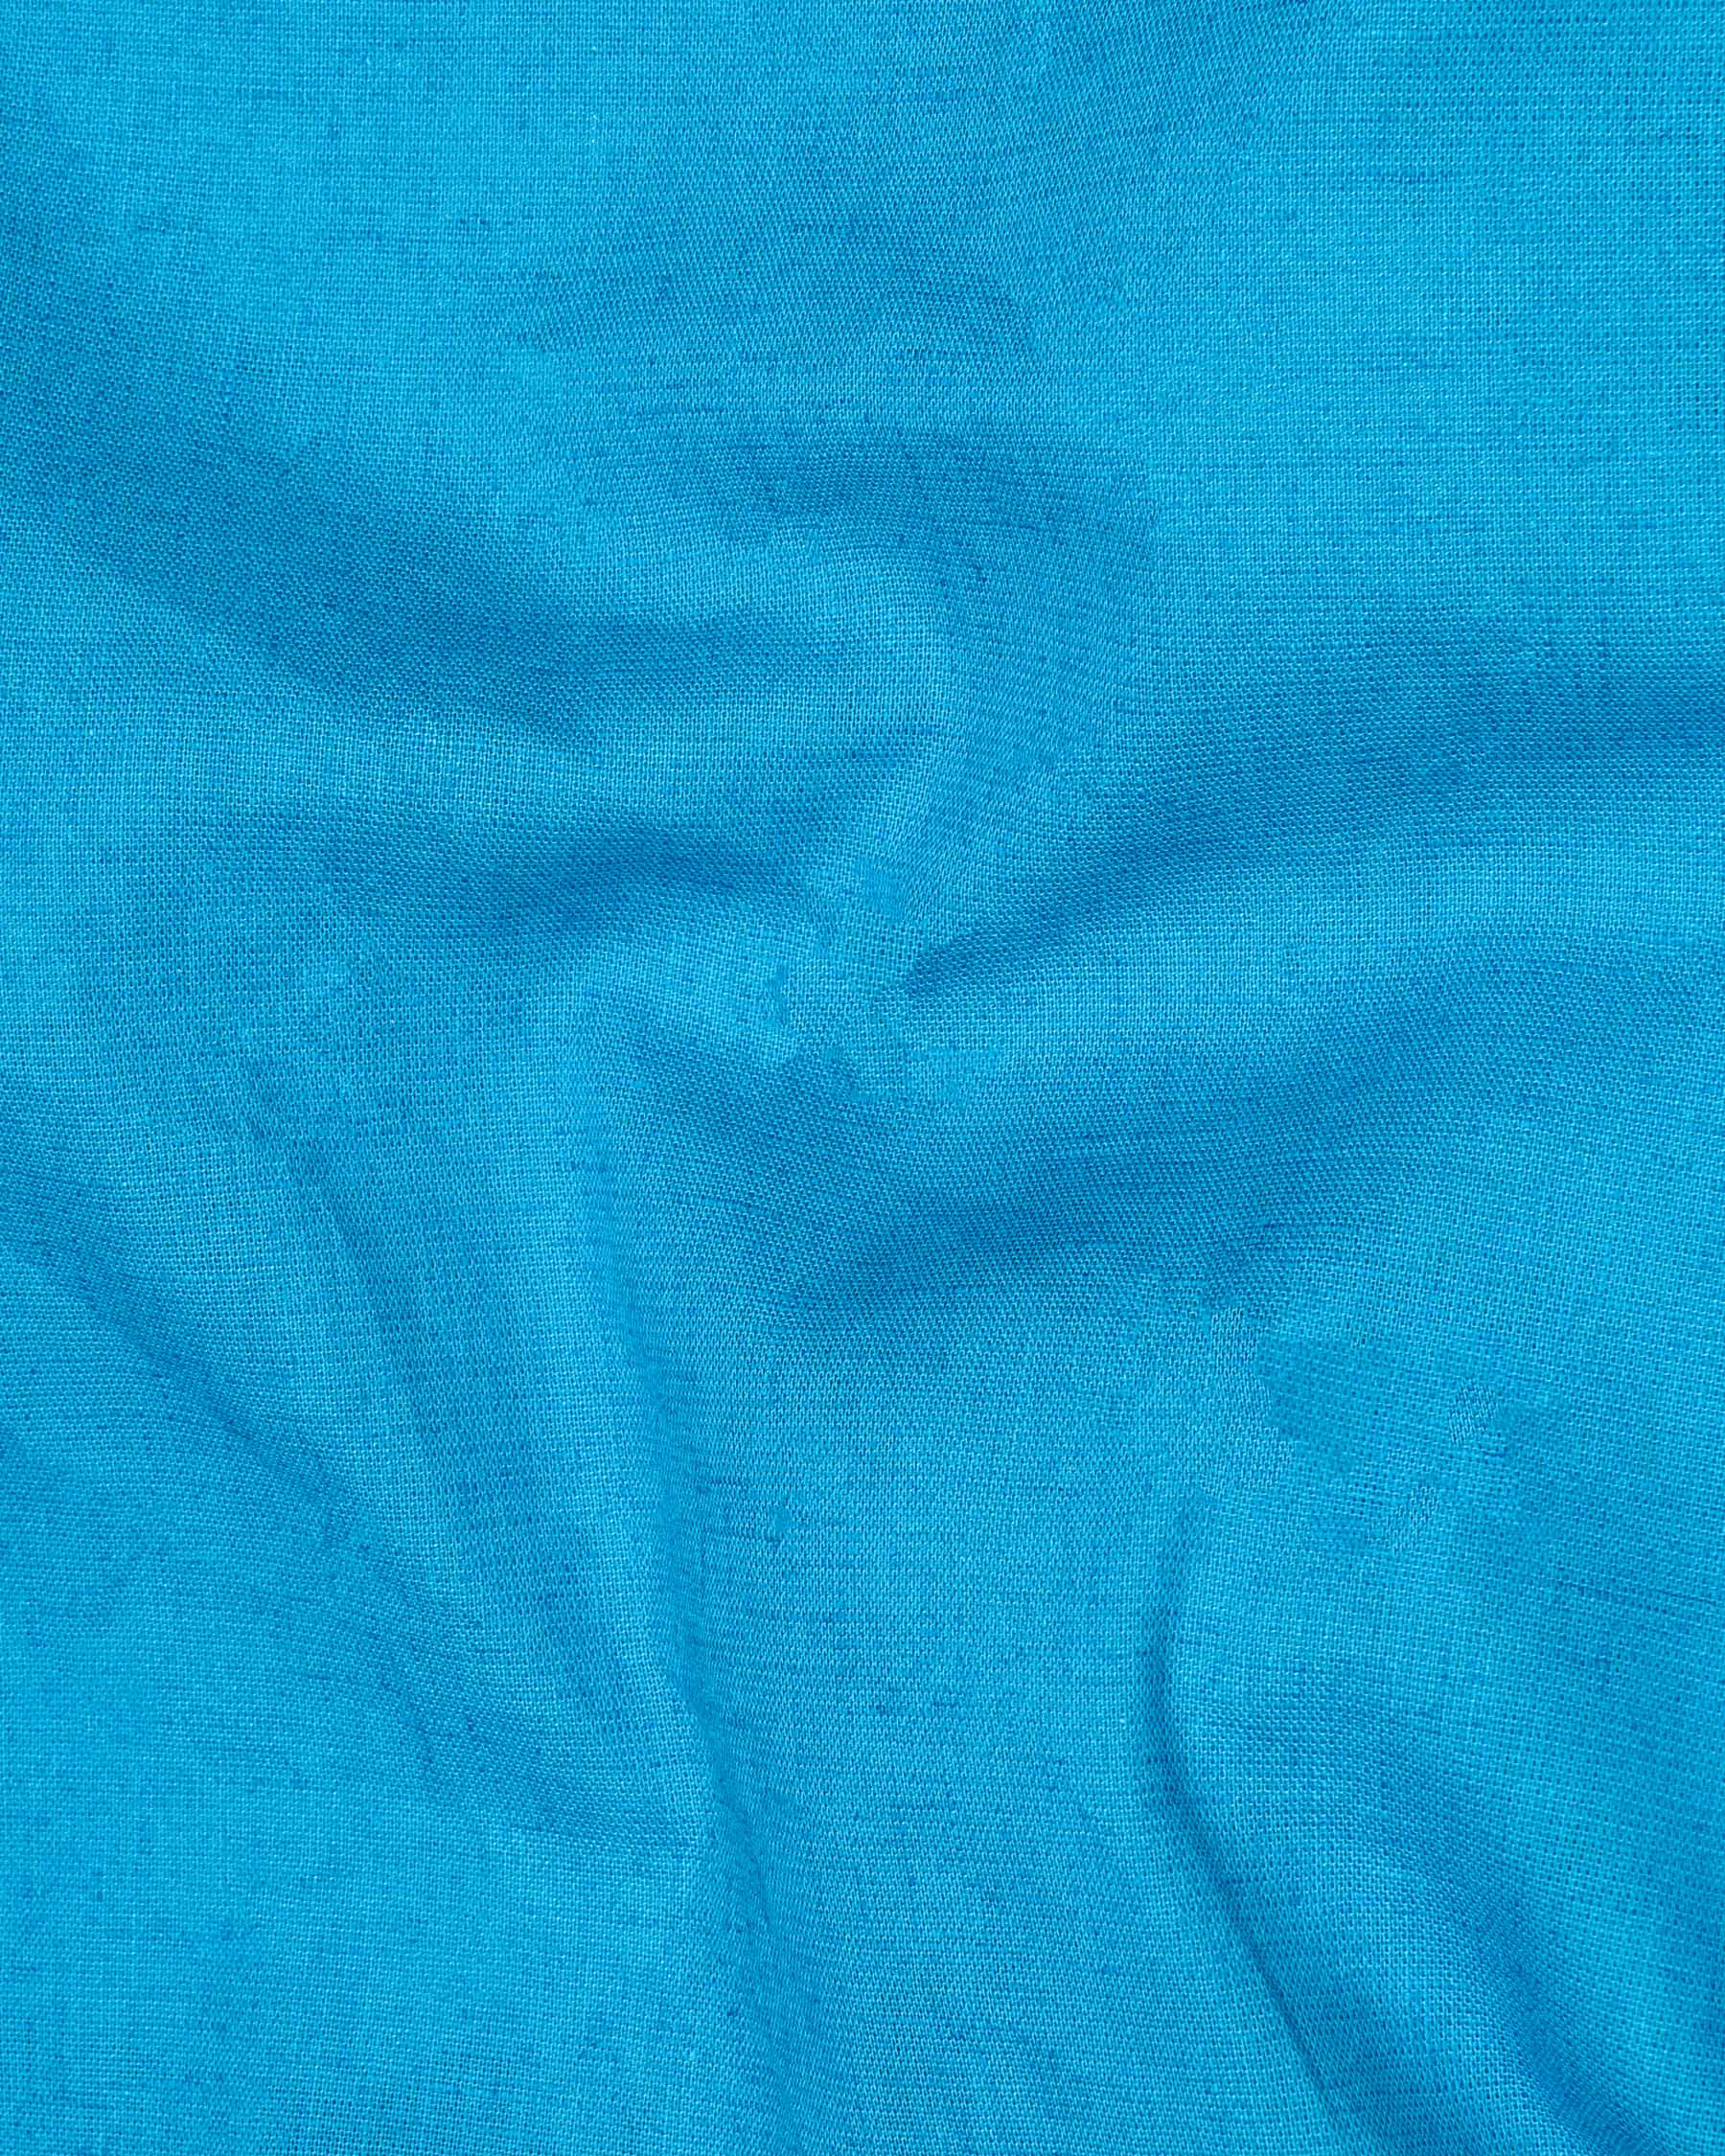 Cerulean Blue with Pin Tucks Luxurious Linen Tuxedo Shirt 7030-TXD-38, 7030-TXD-H-38, 7030-TXD-39, 7030-TXD-H-39, 7030-TXD-40, 7030-TXD-H-40, 7030-TXD-42, 7030-TXD-H-42, 7030-TXD-44, 7030-TXD-H-44, 7030-TXD-46, 7030-TXD-H-46, 7030-TXD-48, 7030-TXD-H-48, 7030-TXD-50, 7030-TXD-H-50, 7030-TXD-52, 7030-TXD-H-52